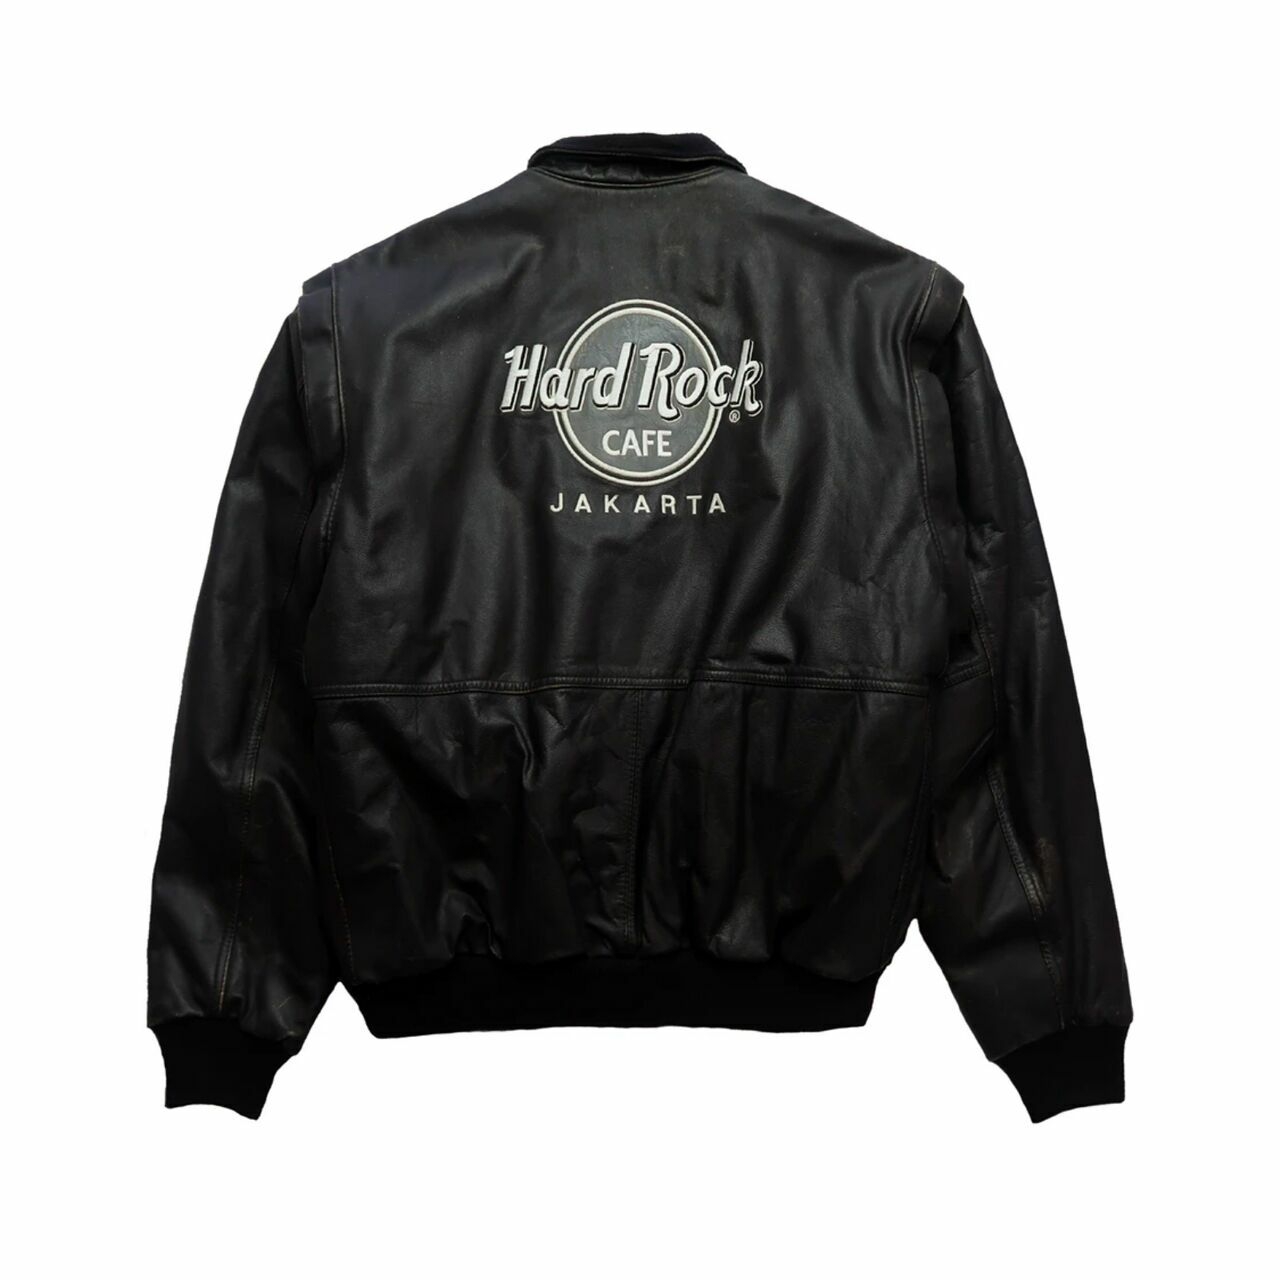 Hard Rock Black Save The Planet Hard Rock Cafe Jakarta Leather Jacket 1971 Jacket